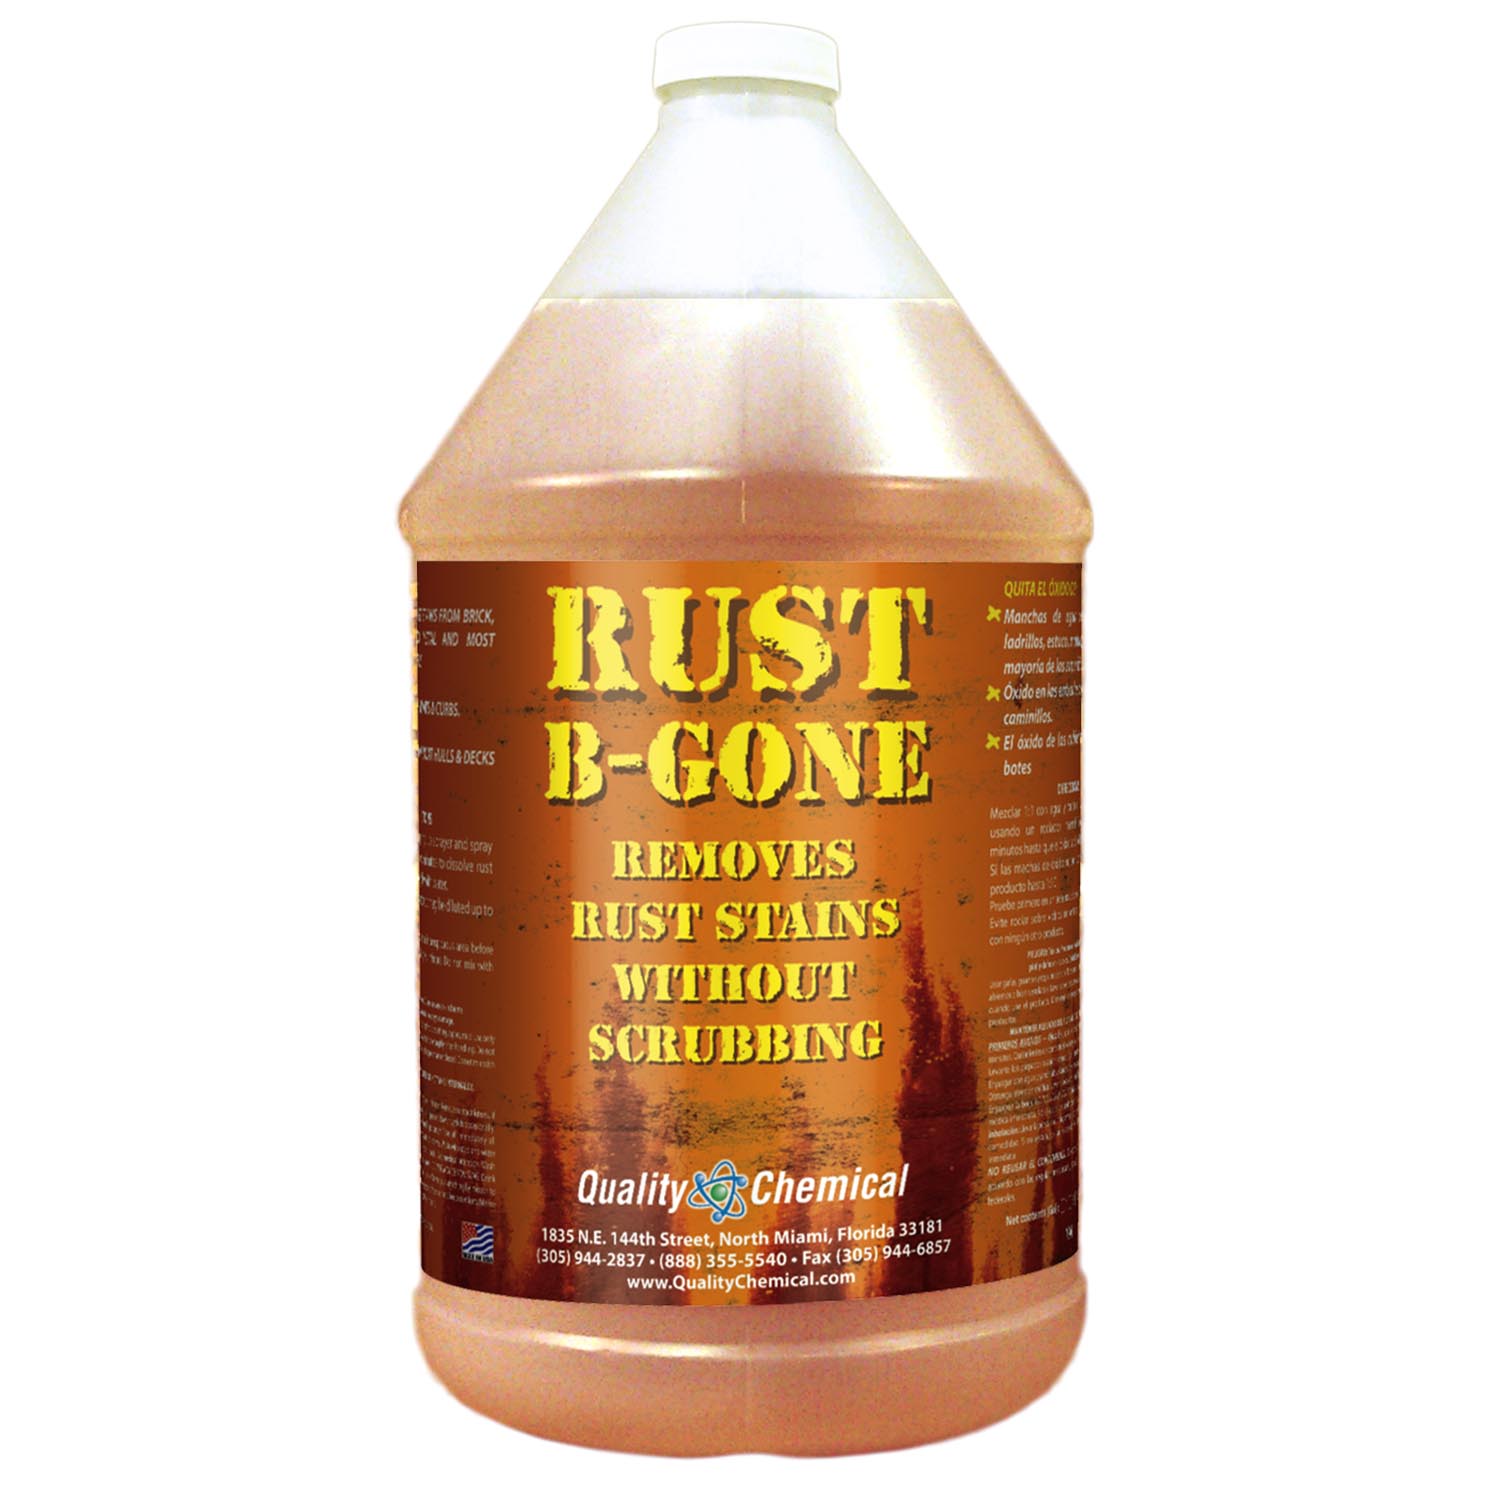 Rust-B-Gone